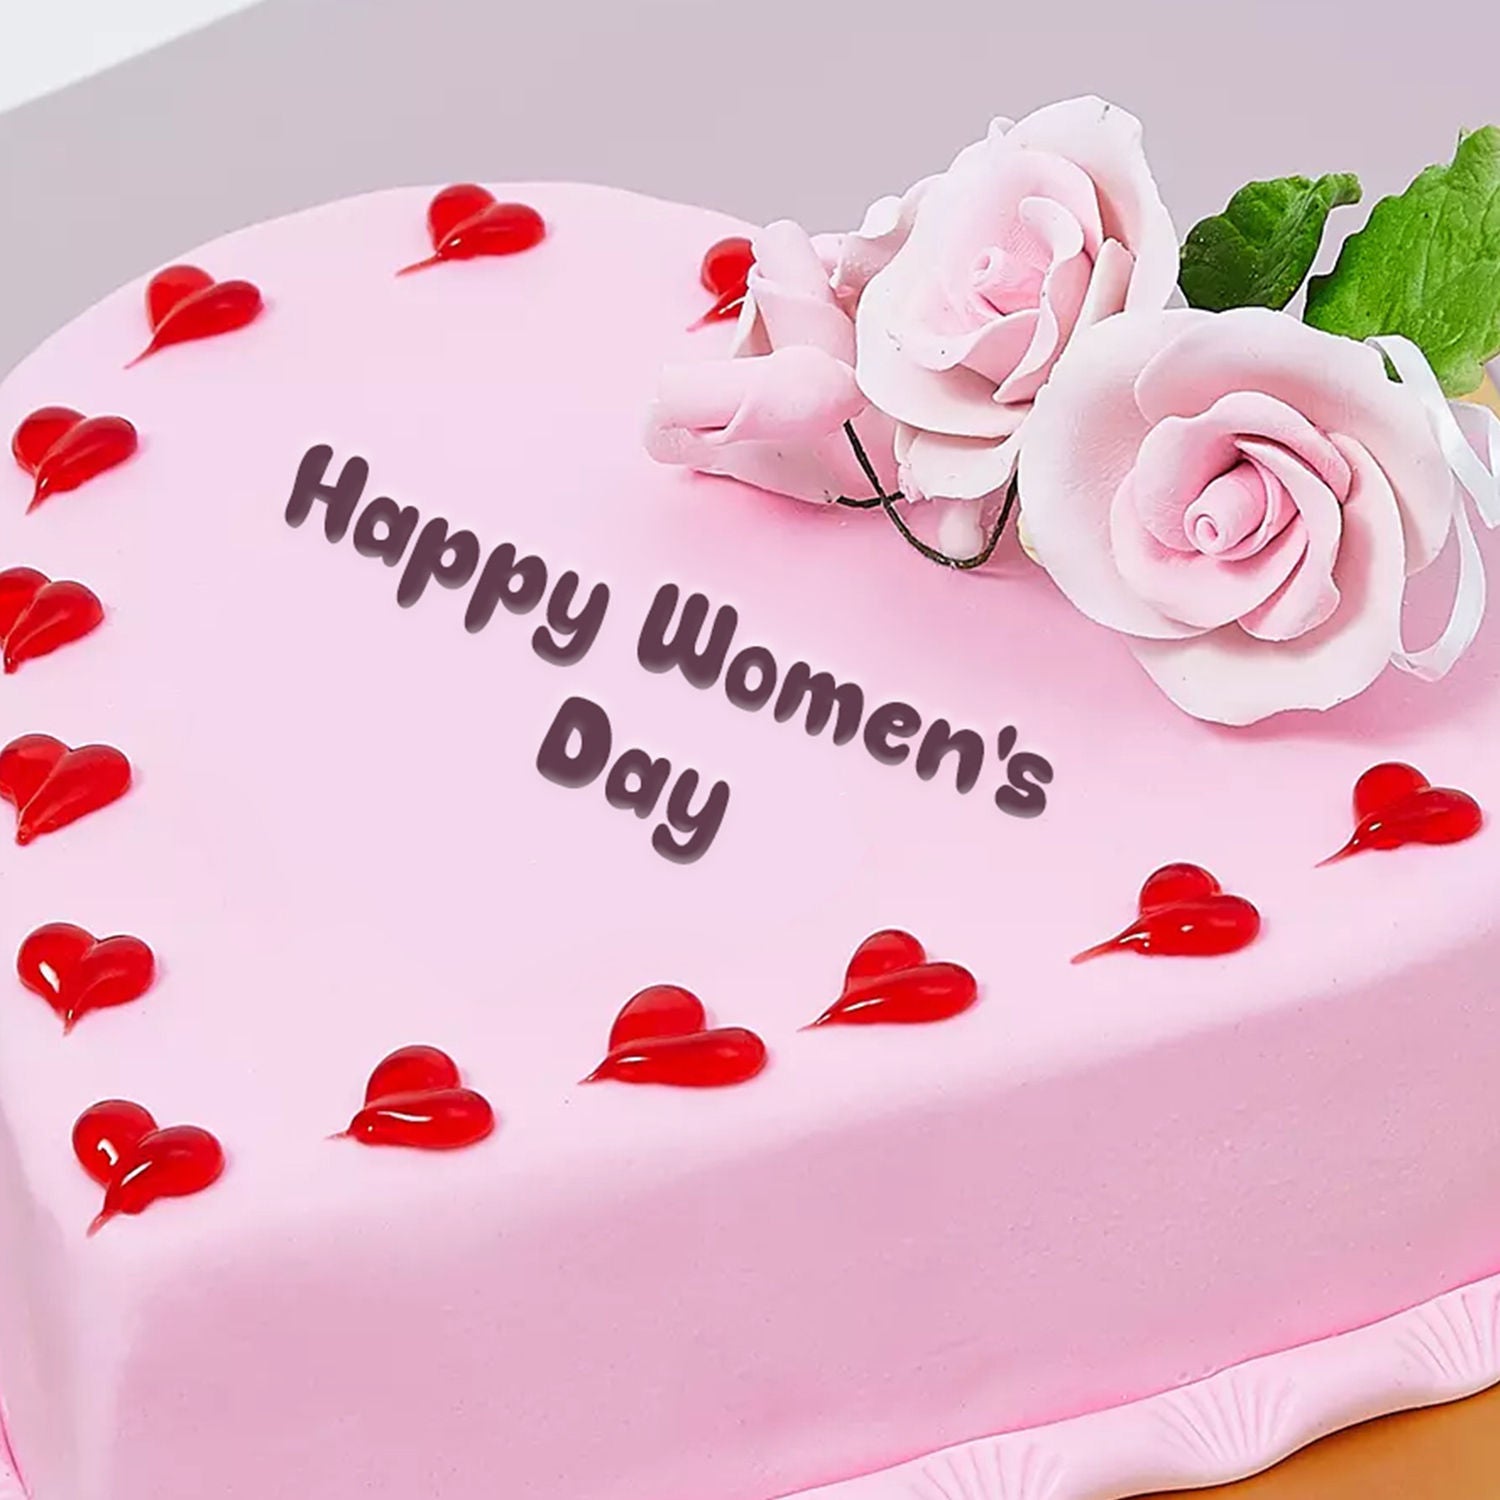 Womens Day Cushion Mug n Cake Combo